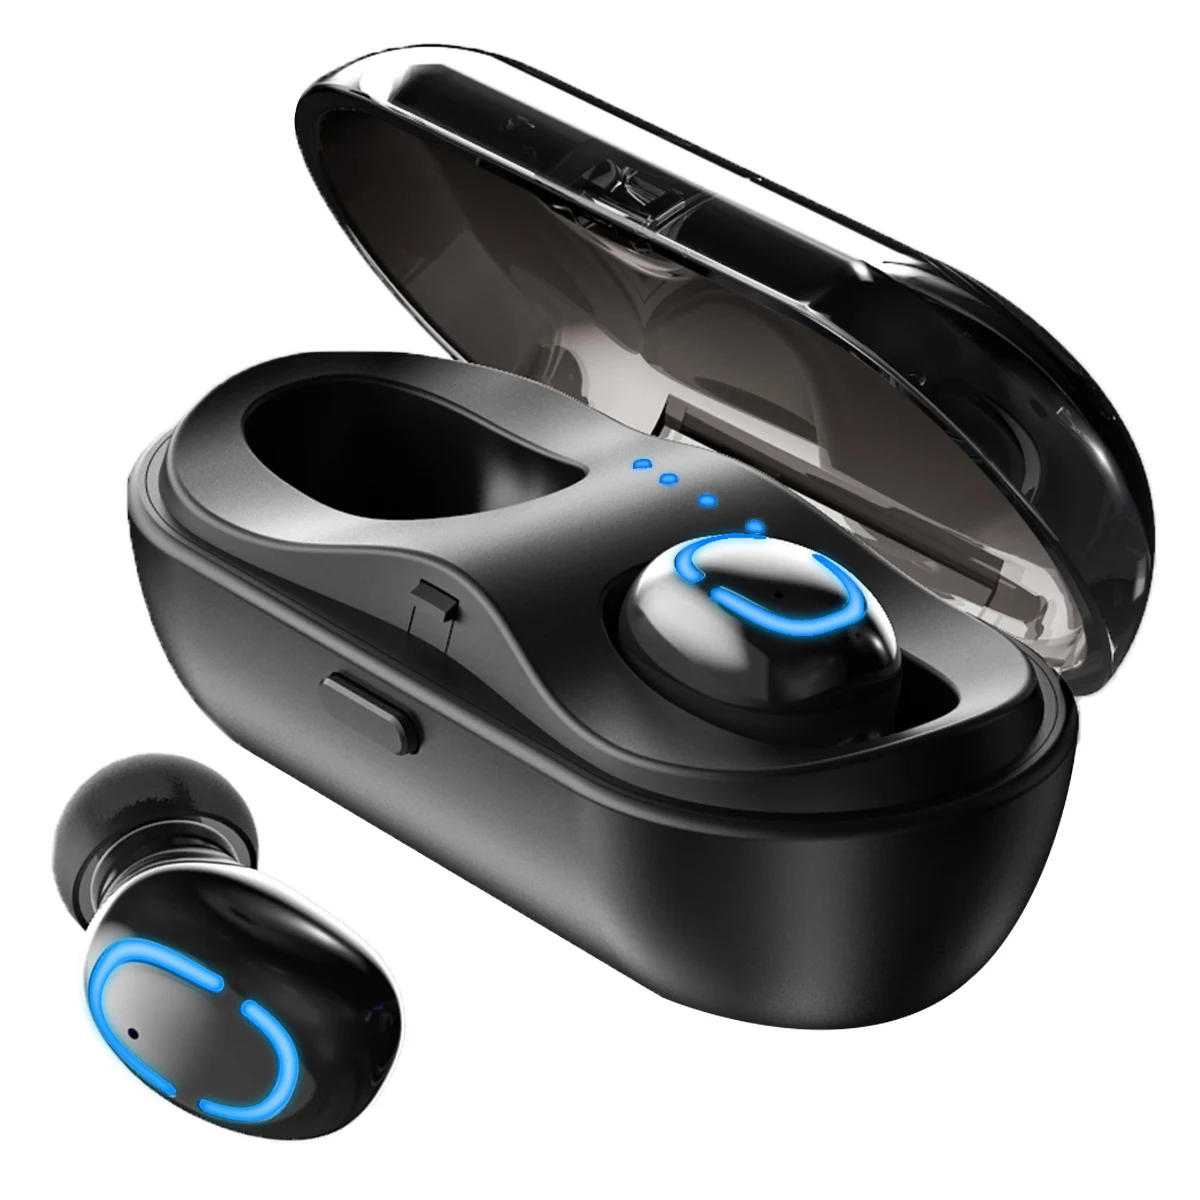 

KIWI design TWS Wireless Earbuds Blue-tooth 5.0 Headphones, True Wireless in-Ear Headsets Built-in Mic HiFi Stereo